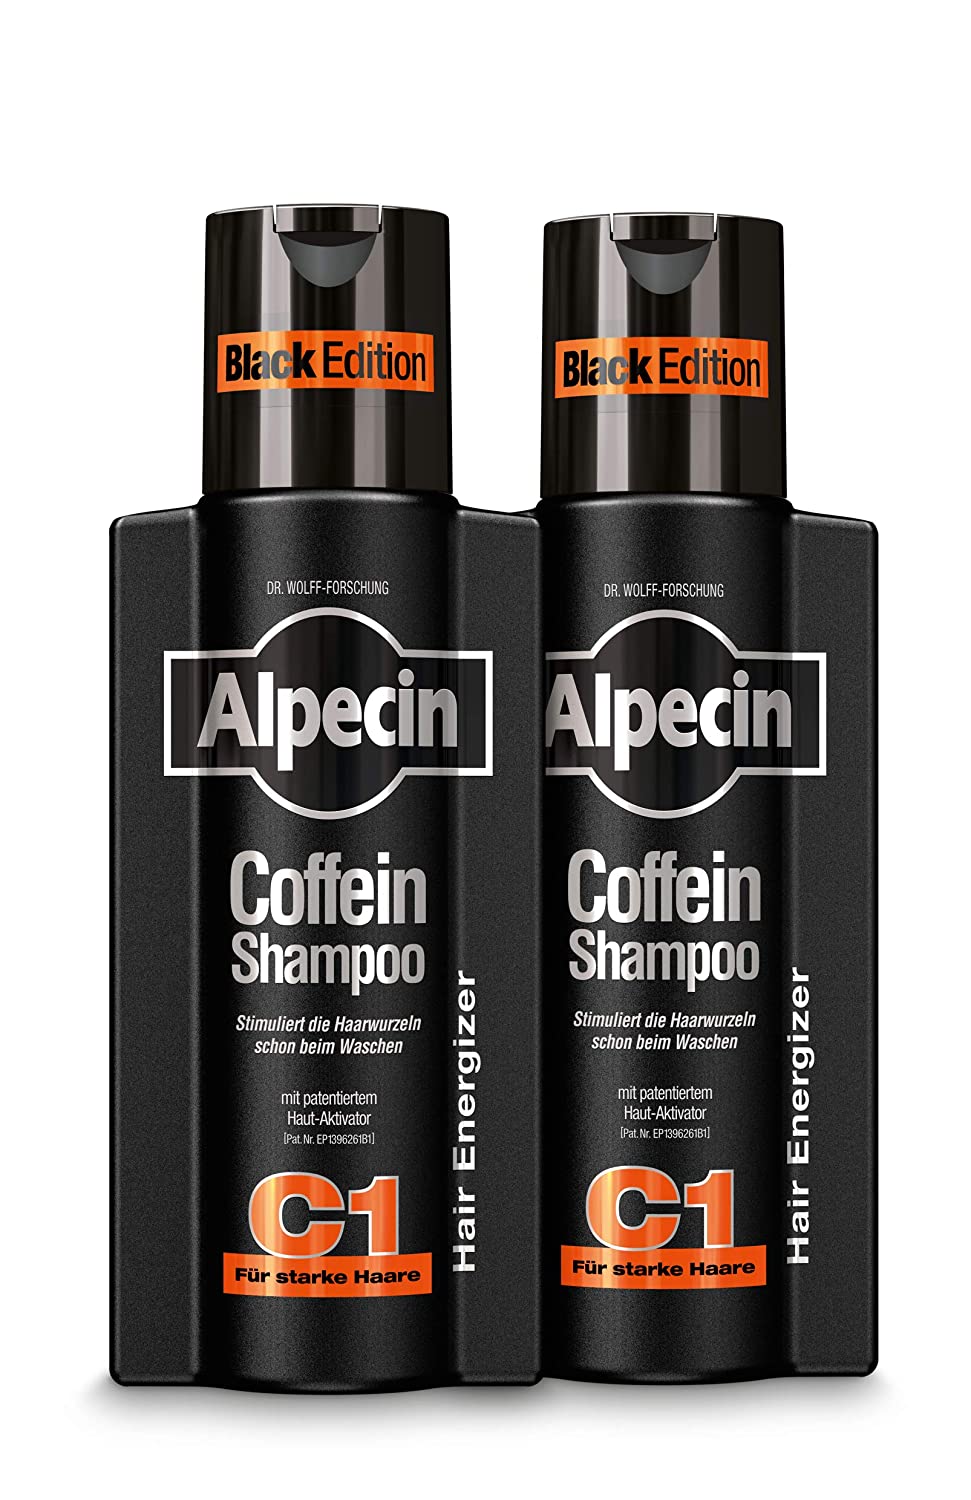 Alpecin Caffeine Shampoo C1 Black Edition - With Fragrance - Hair Growth Stimulating Hair Shampoo with Caffeine - Against Hereditary Hair Loss in Men - 2 x 250 ml, ‎black